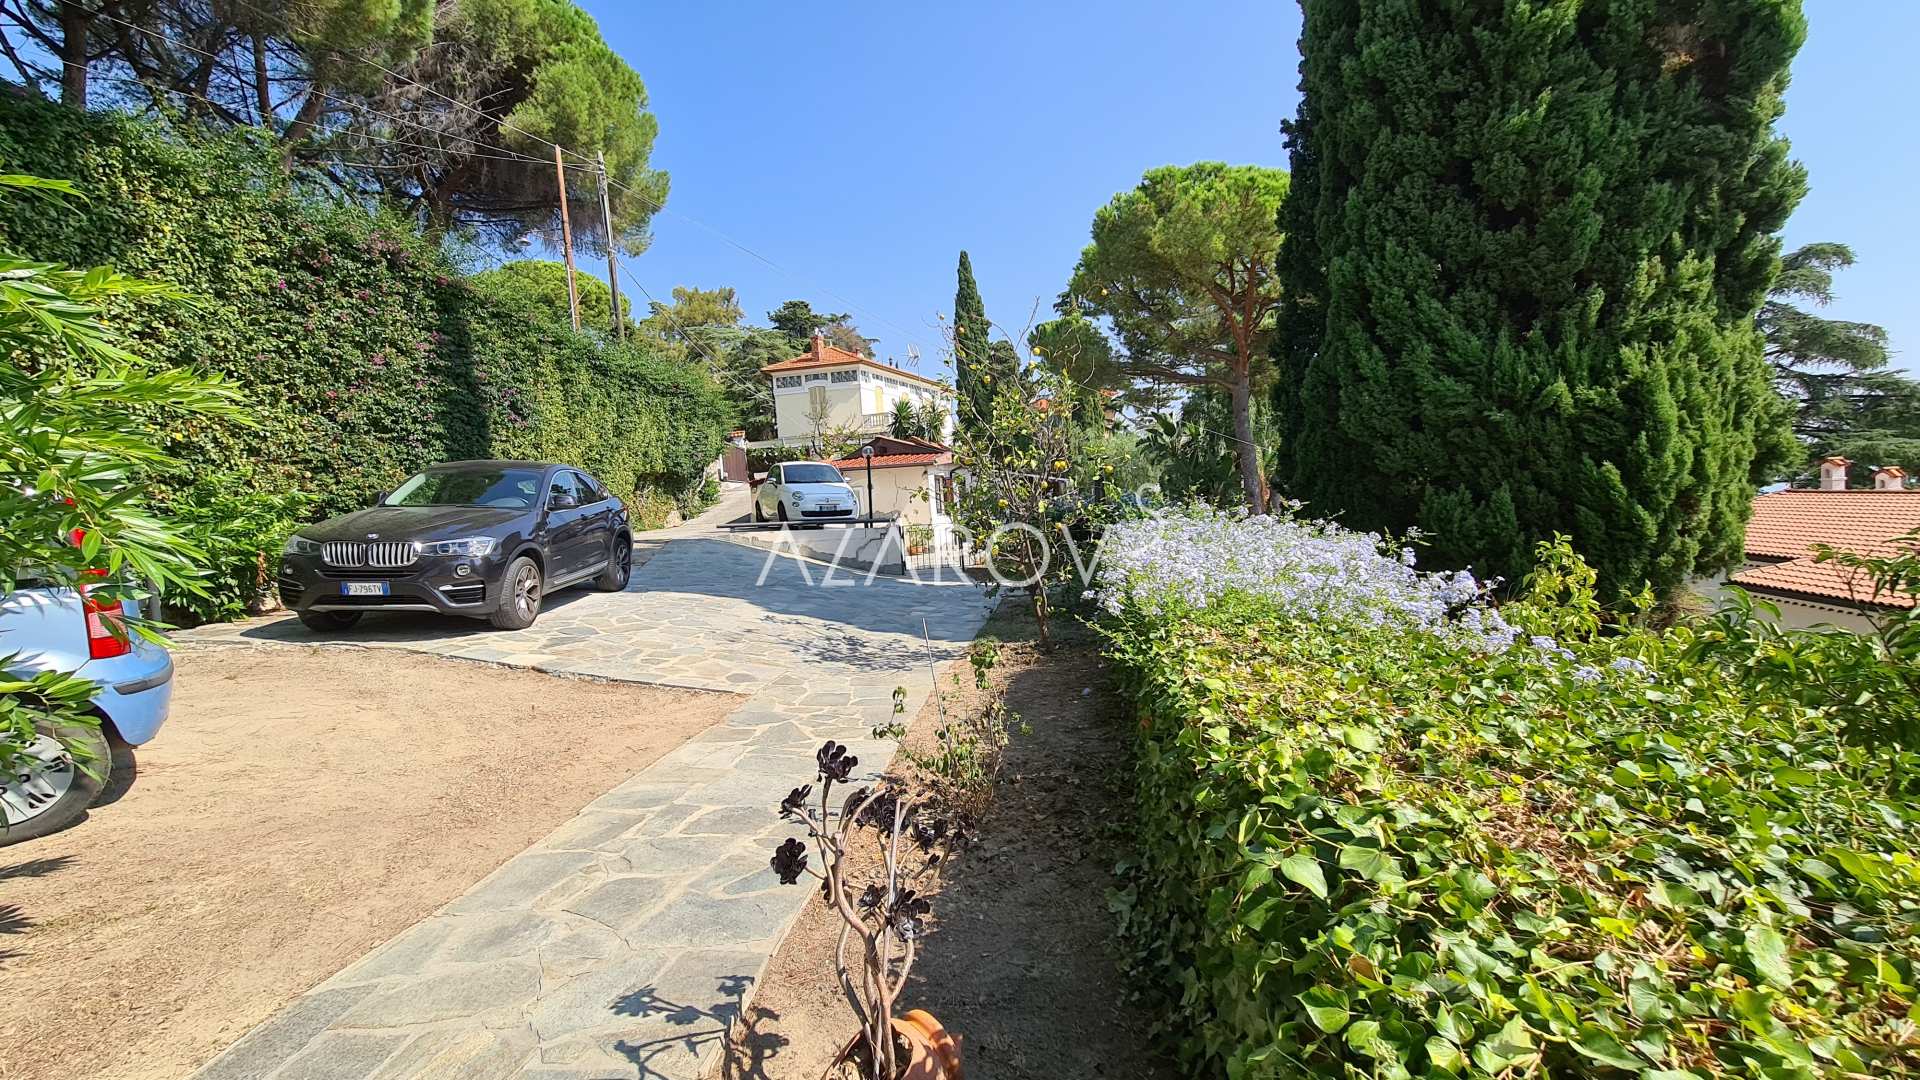 Villa i Sanremo med en smuk park